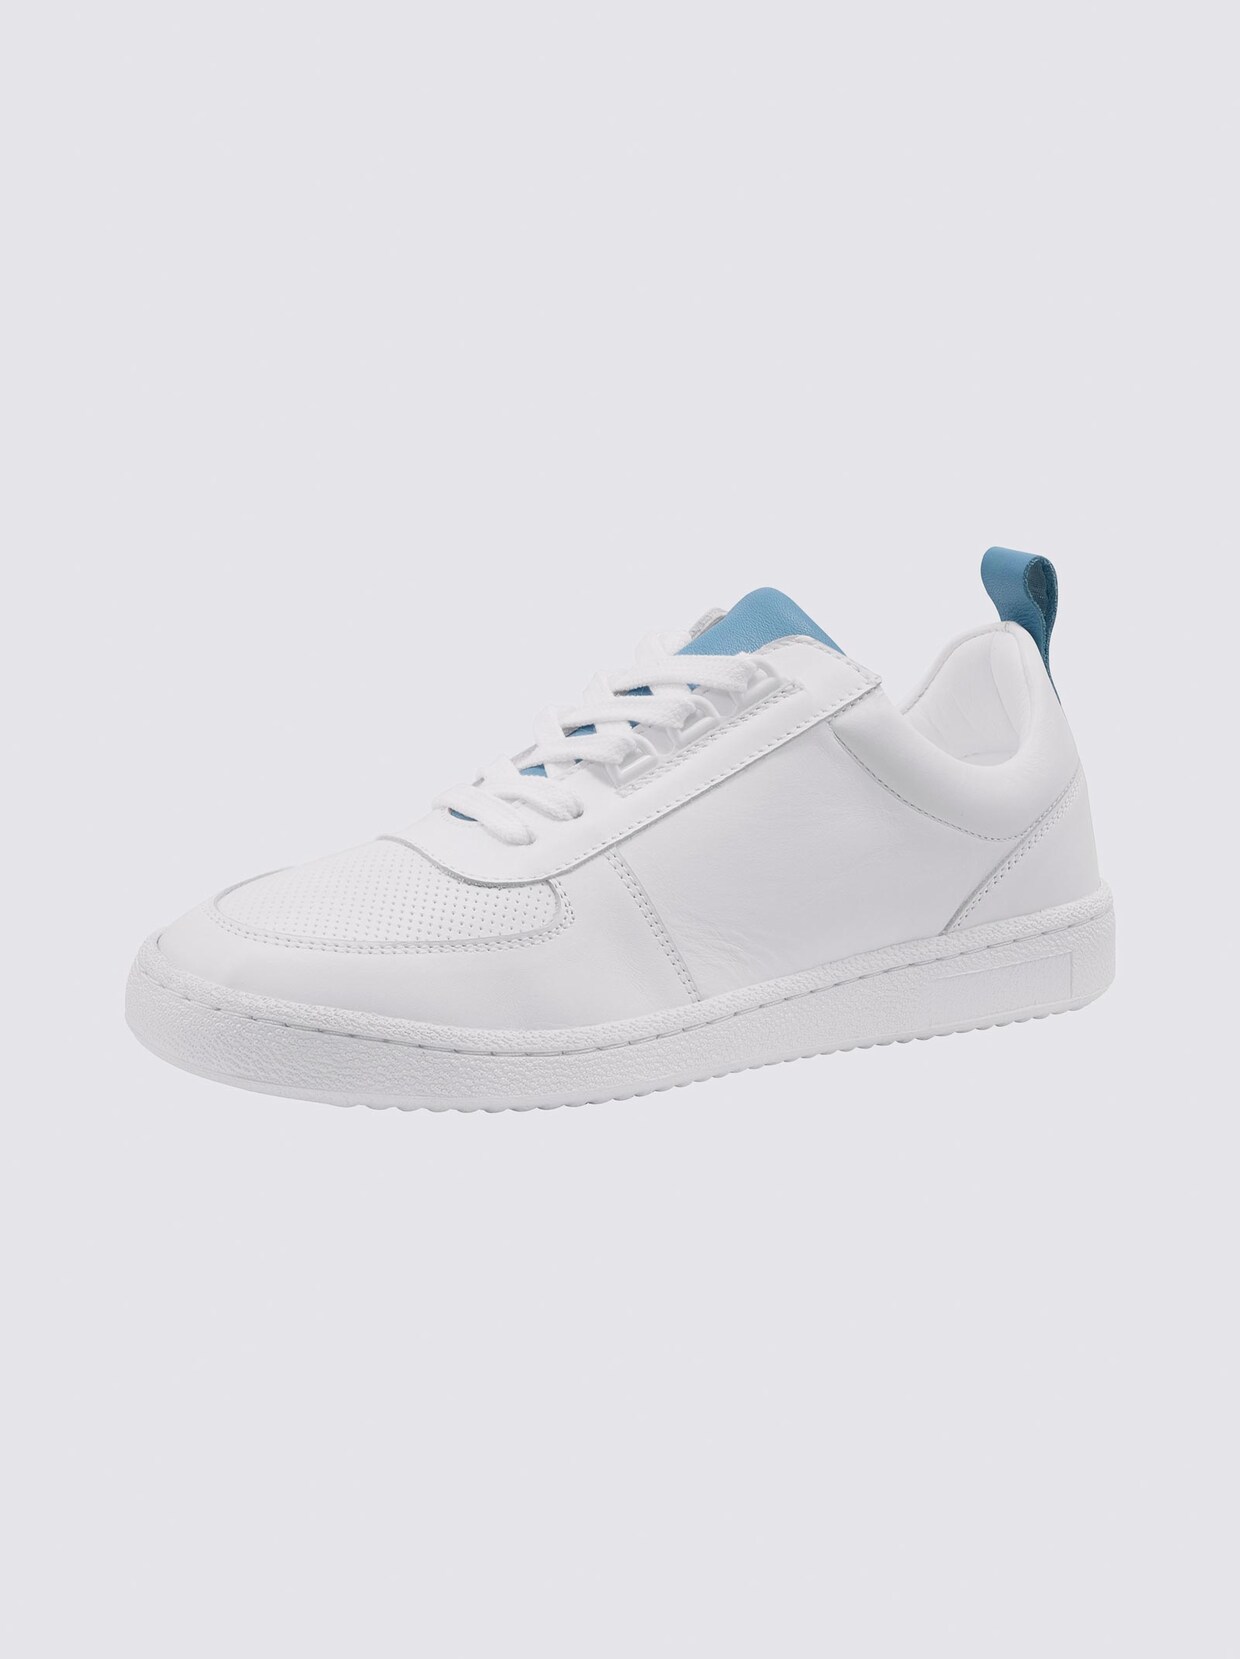 heine Sneaker - weiß-blau